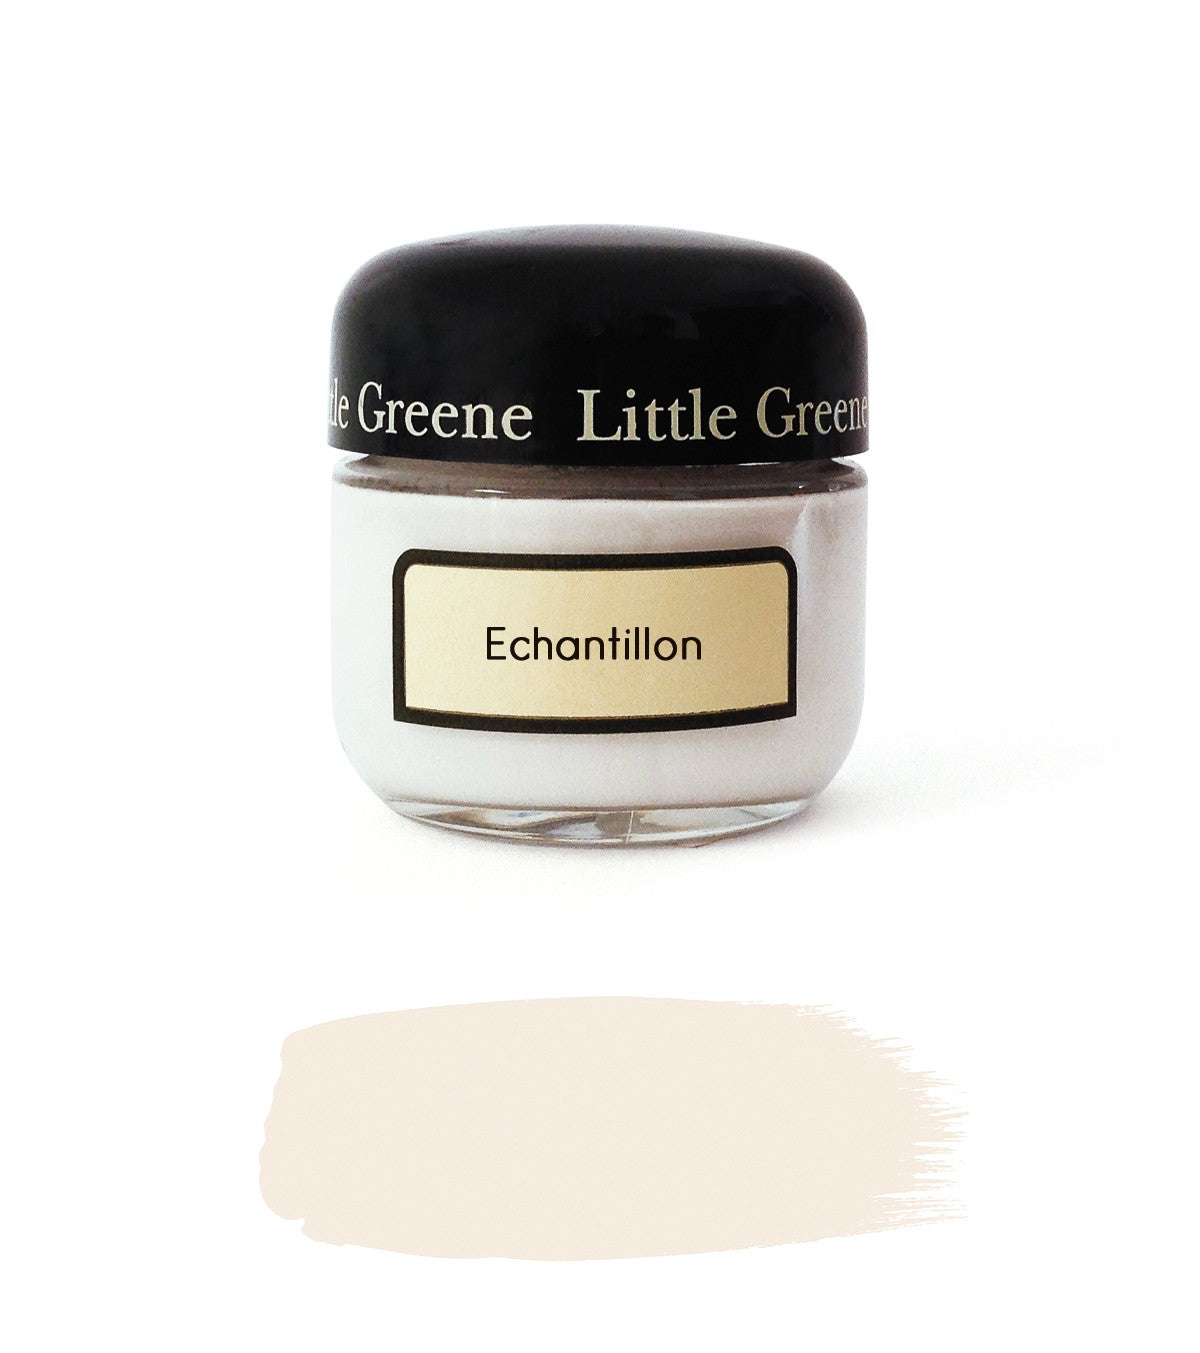 Little Greene paint - China Clay (1)